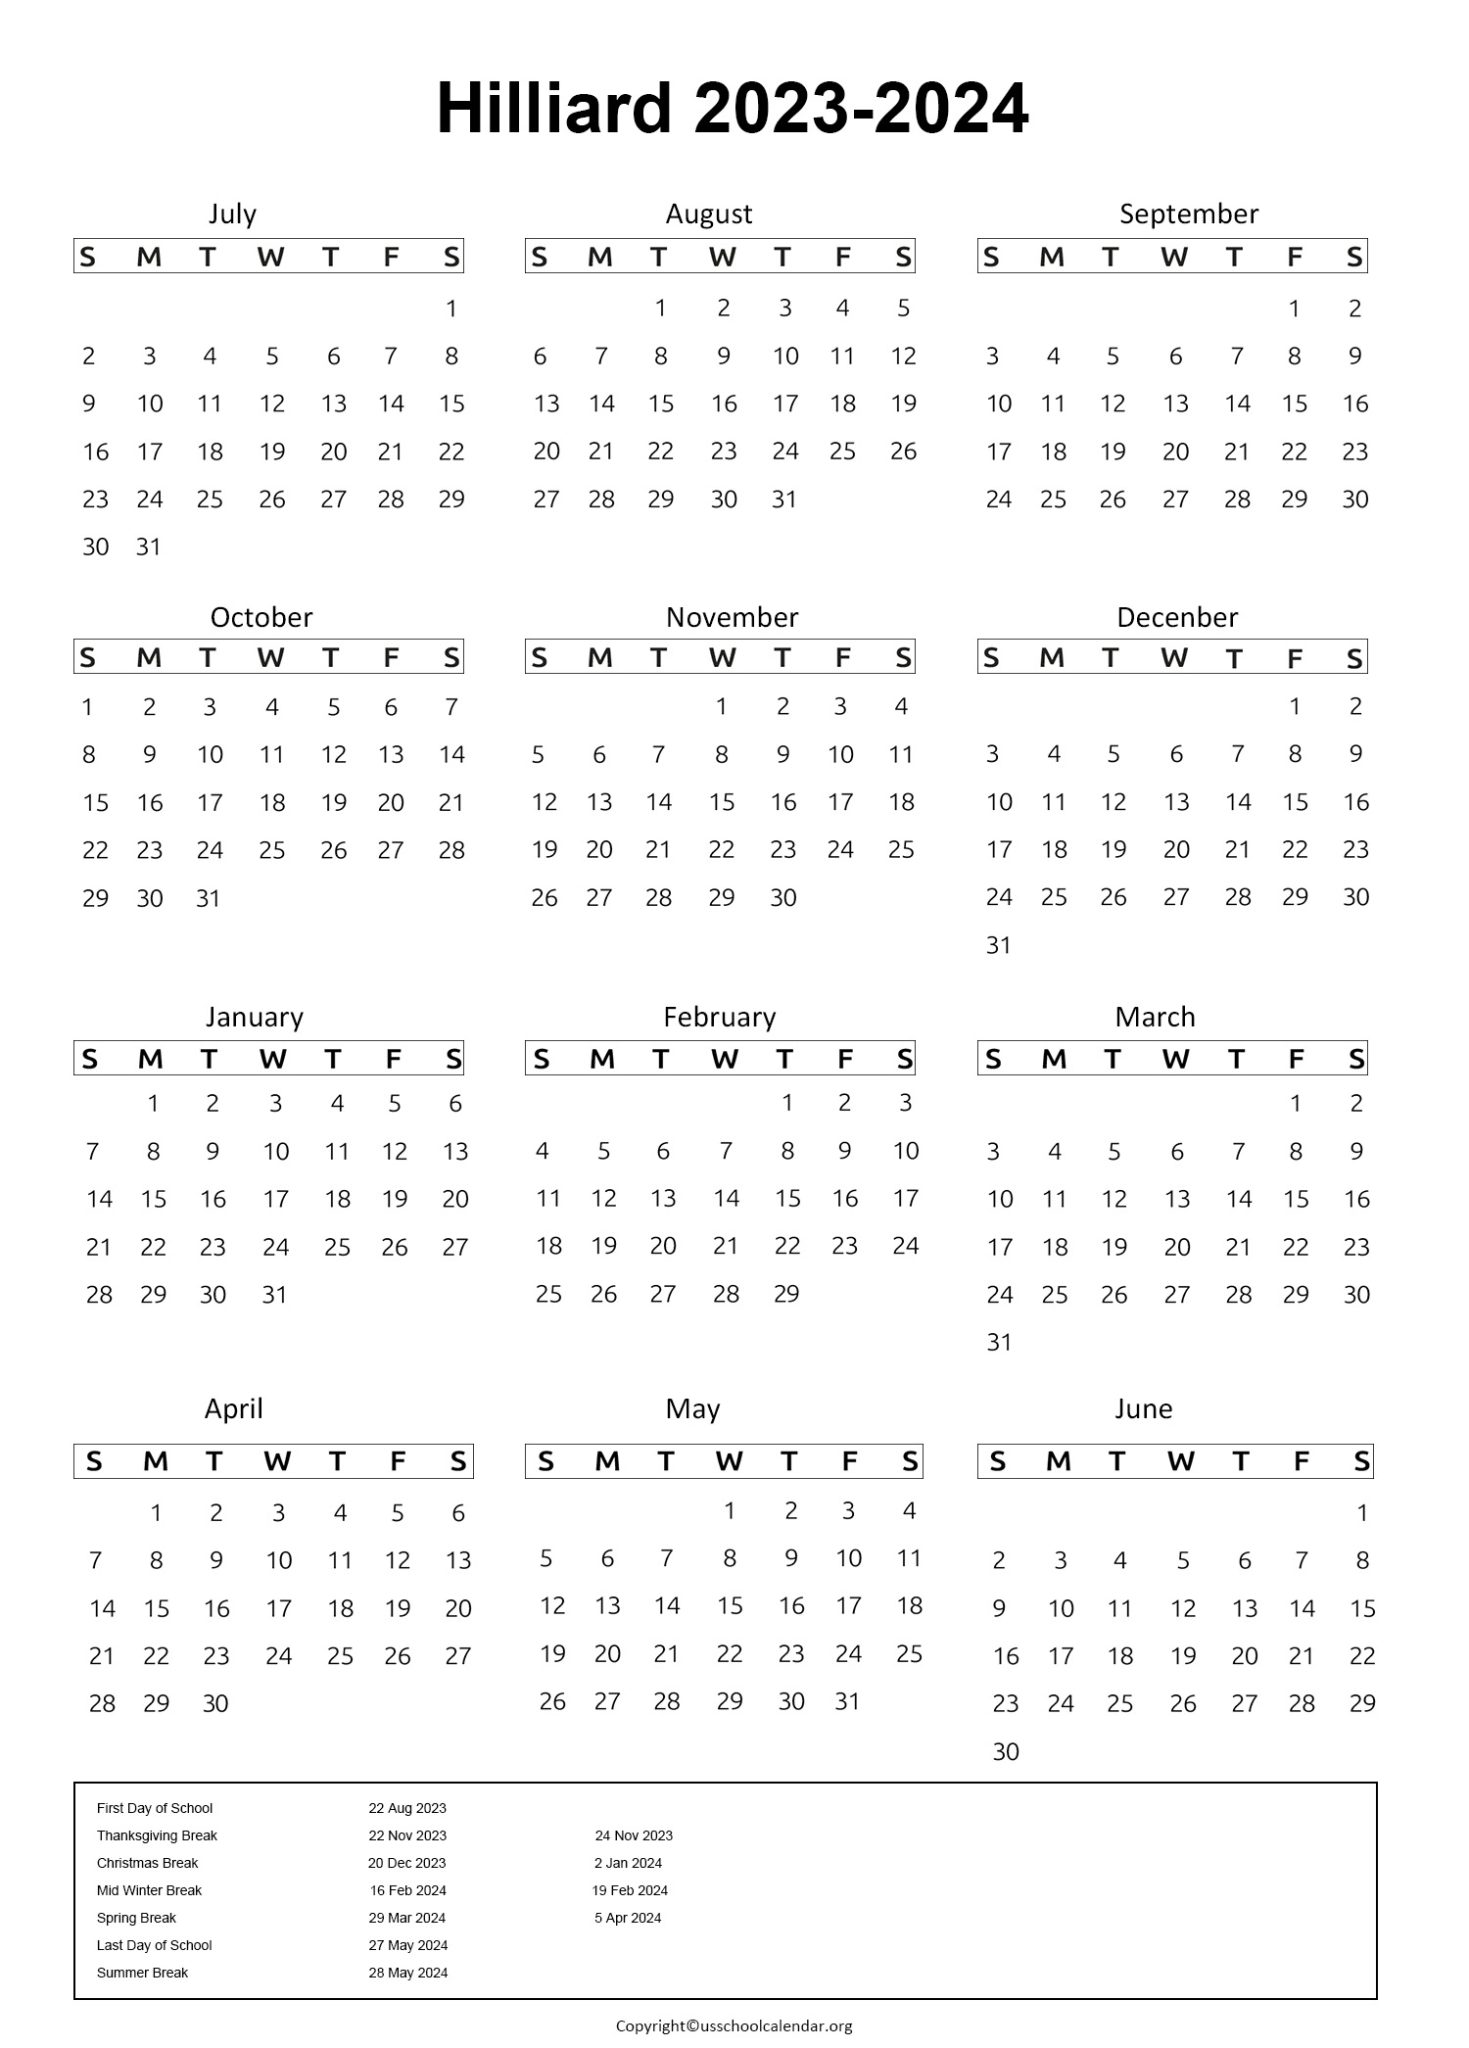 Hilliard City Schools Calendar with Holidays 2023-2024